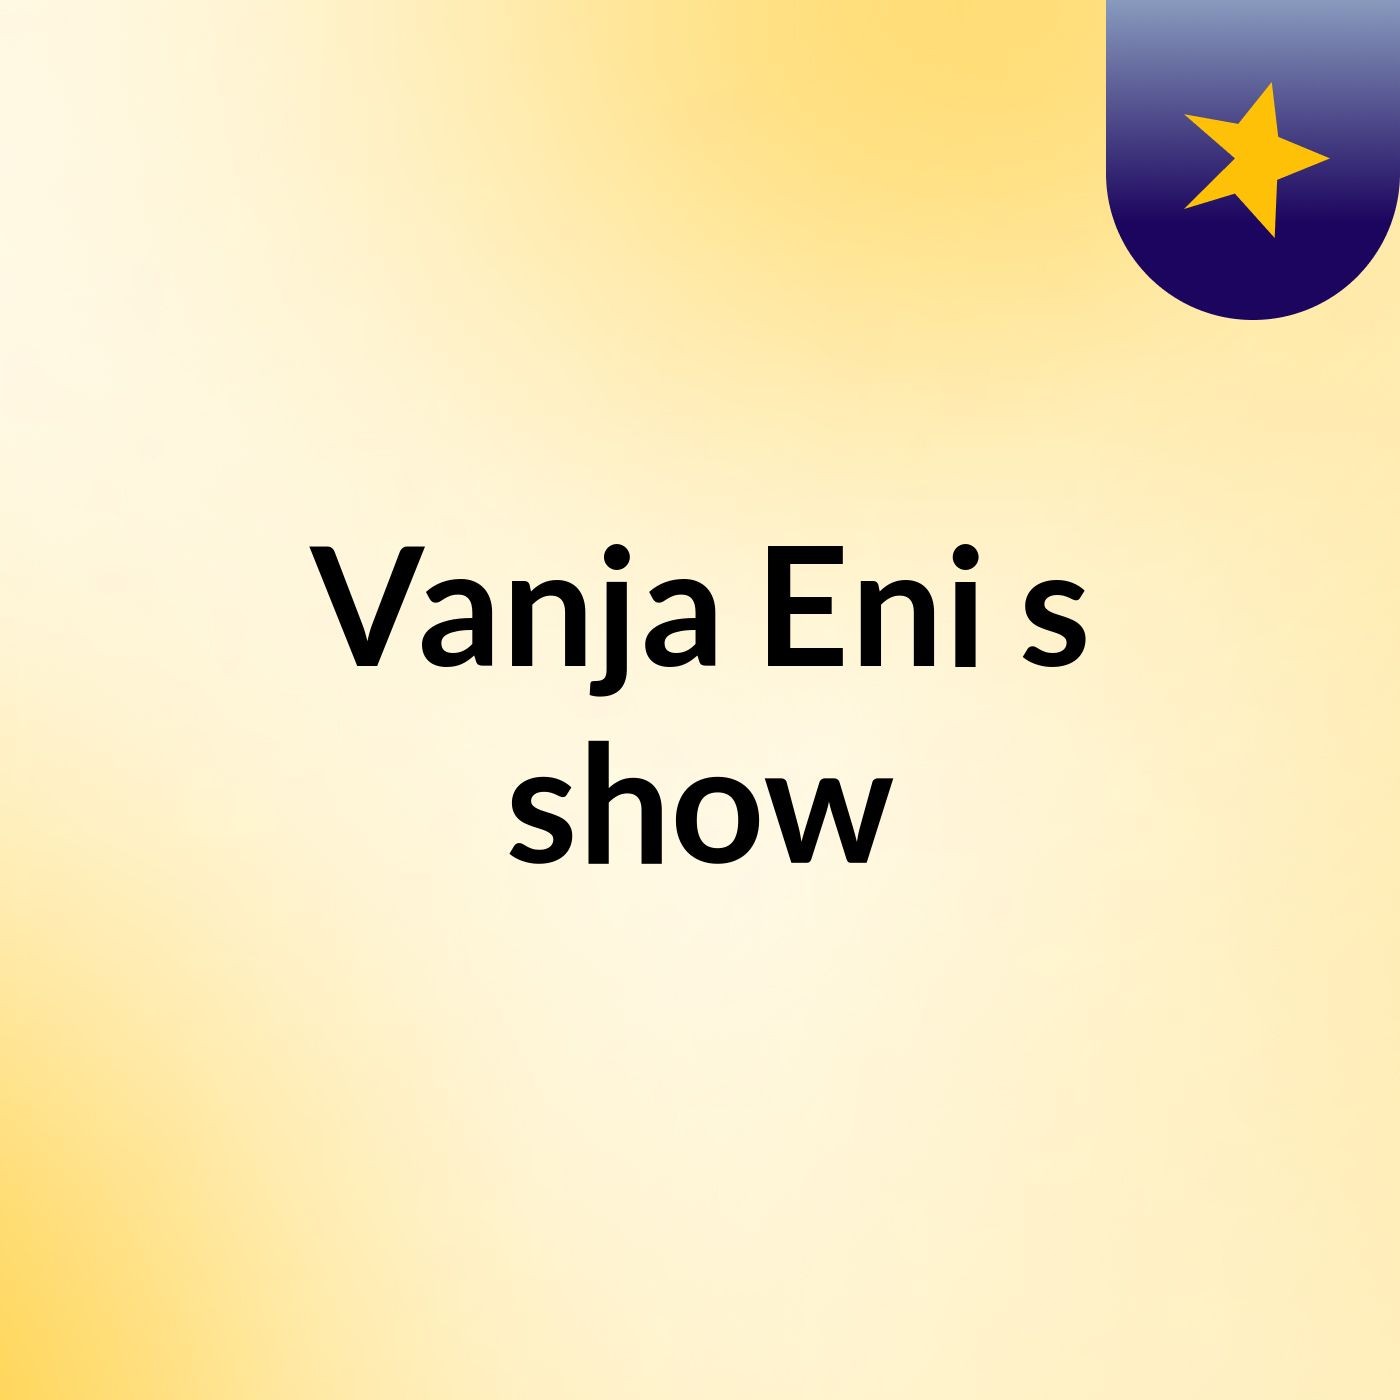 Vanja Eni's show